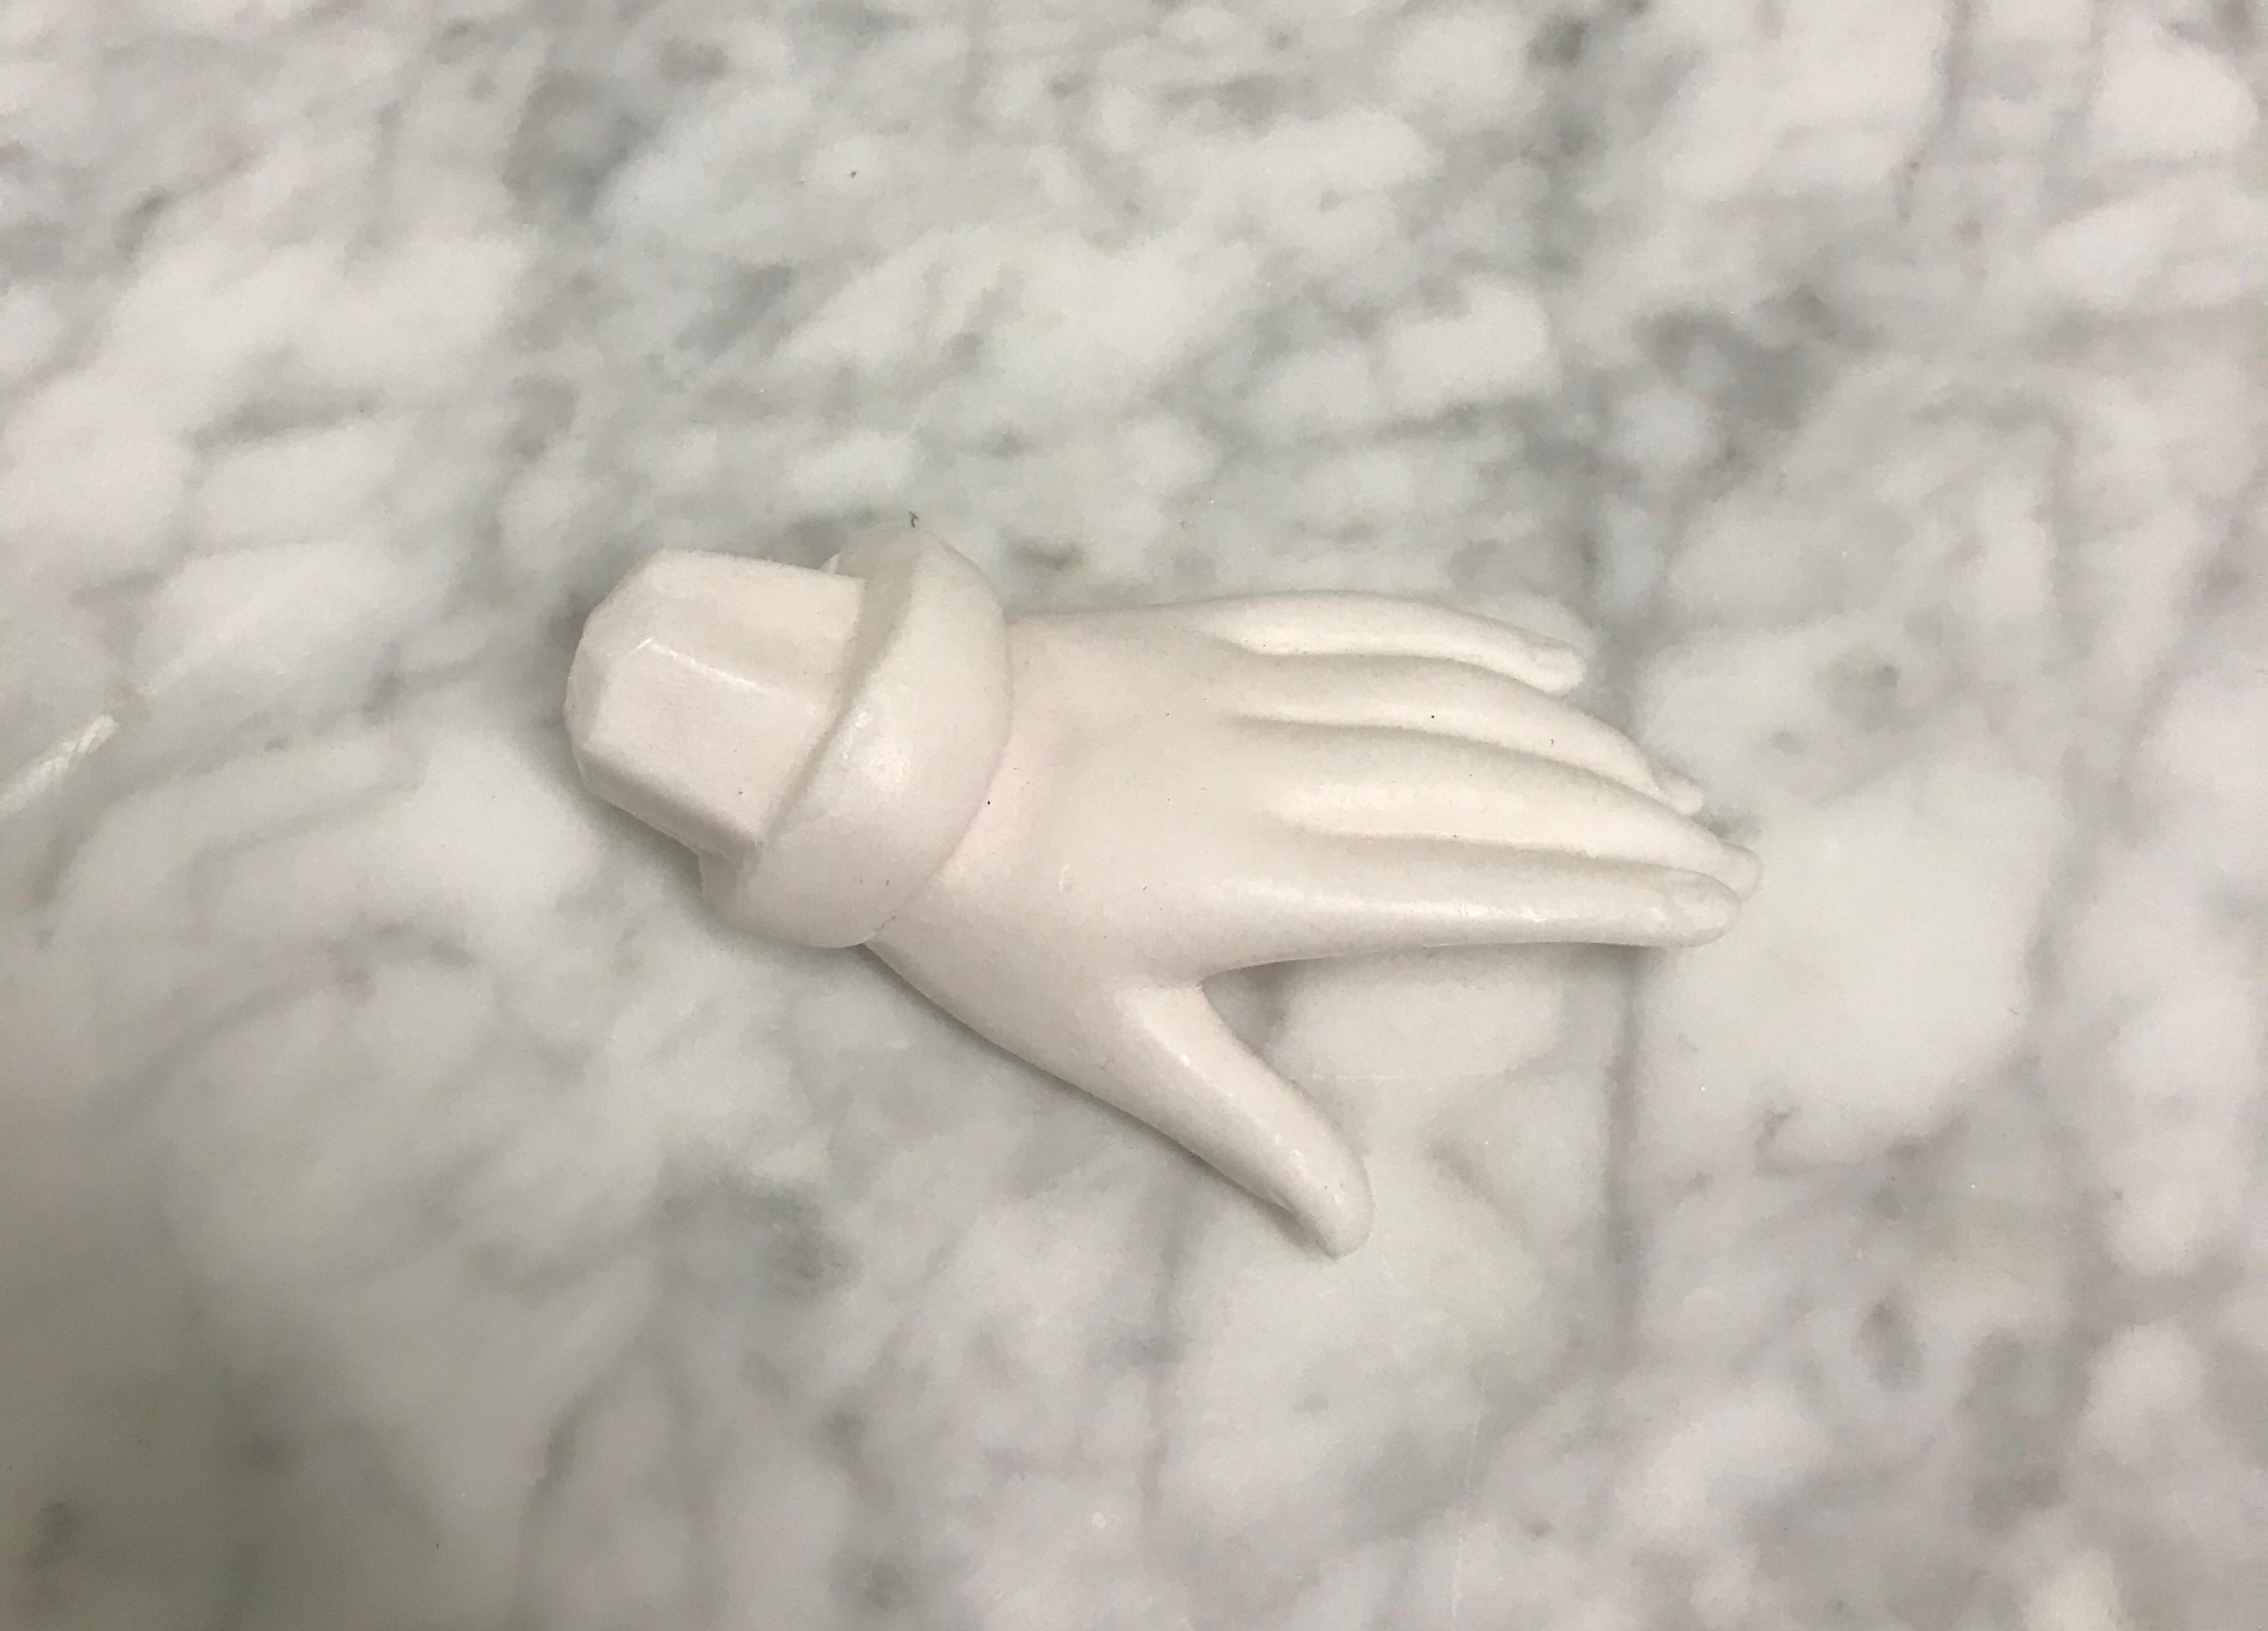 petah coyne Figurative Sculpture - Petah Coyne - Cast solid wax hand of Madonna figure, 2006 (unique)